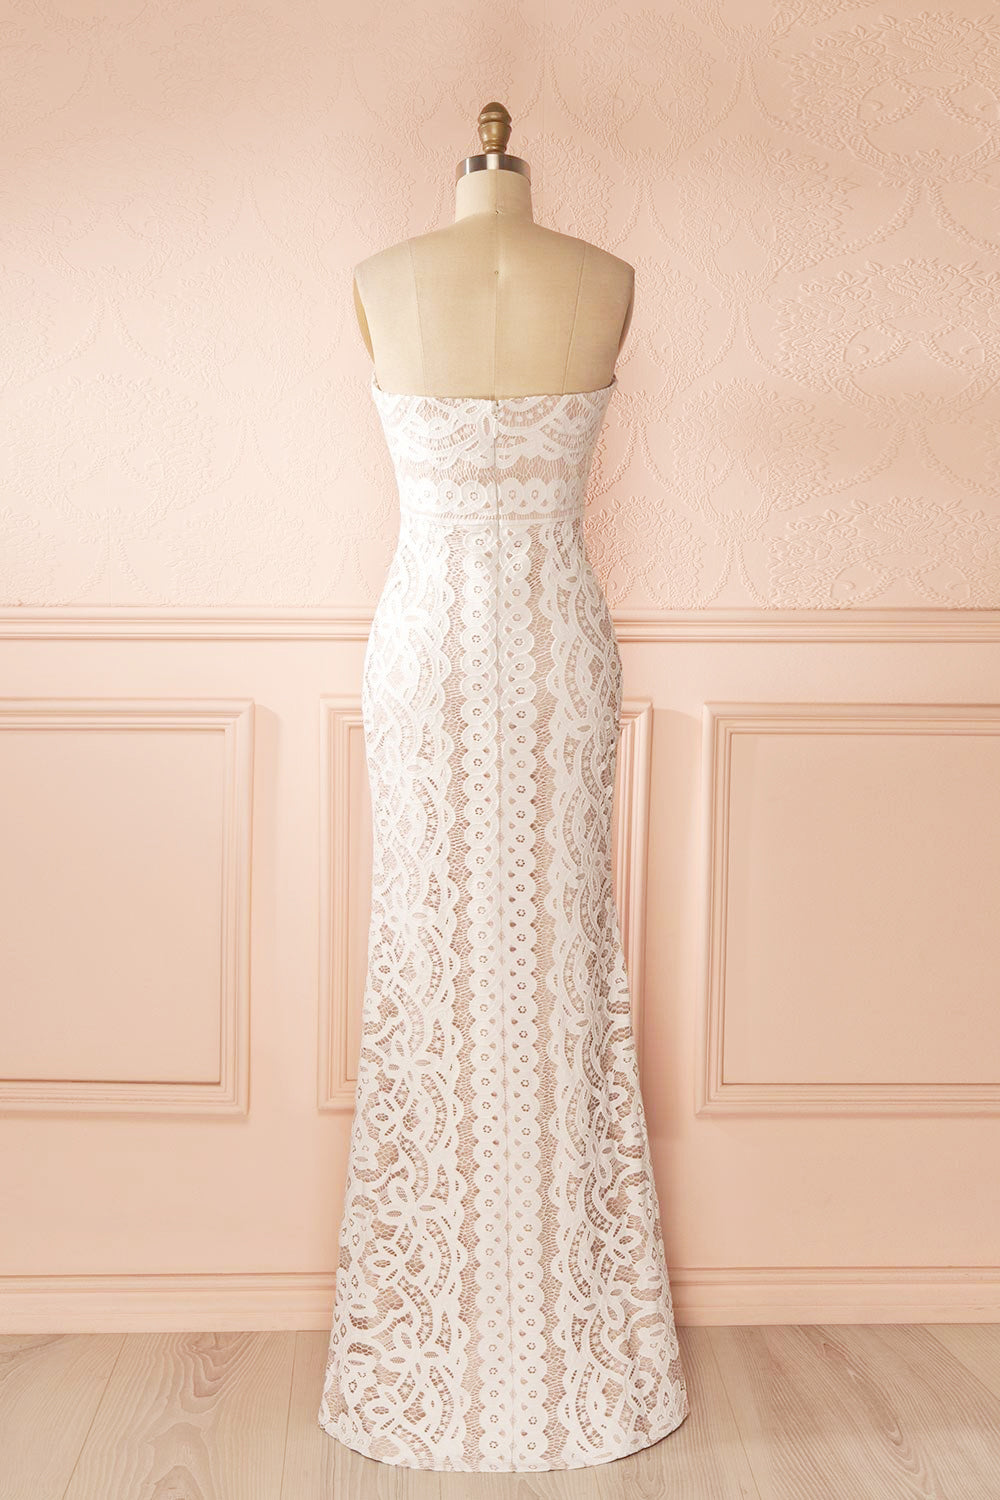 Nelda Neige - Cream lace bustier gown back view